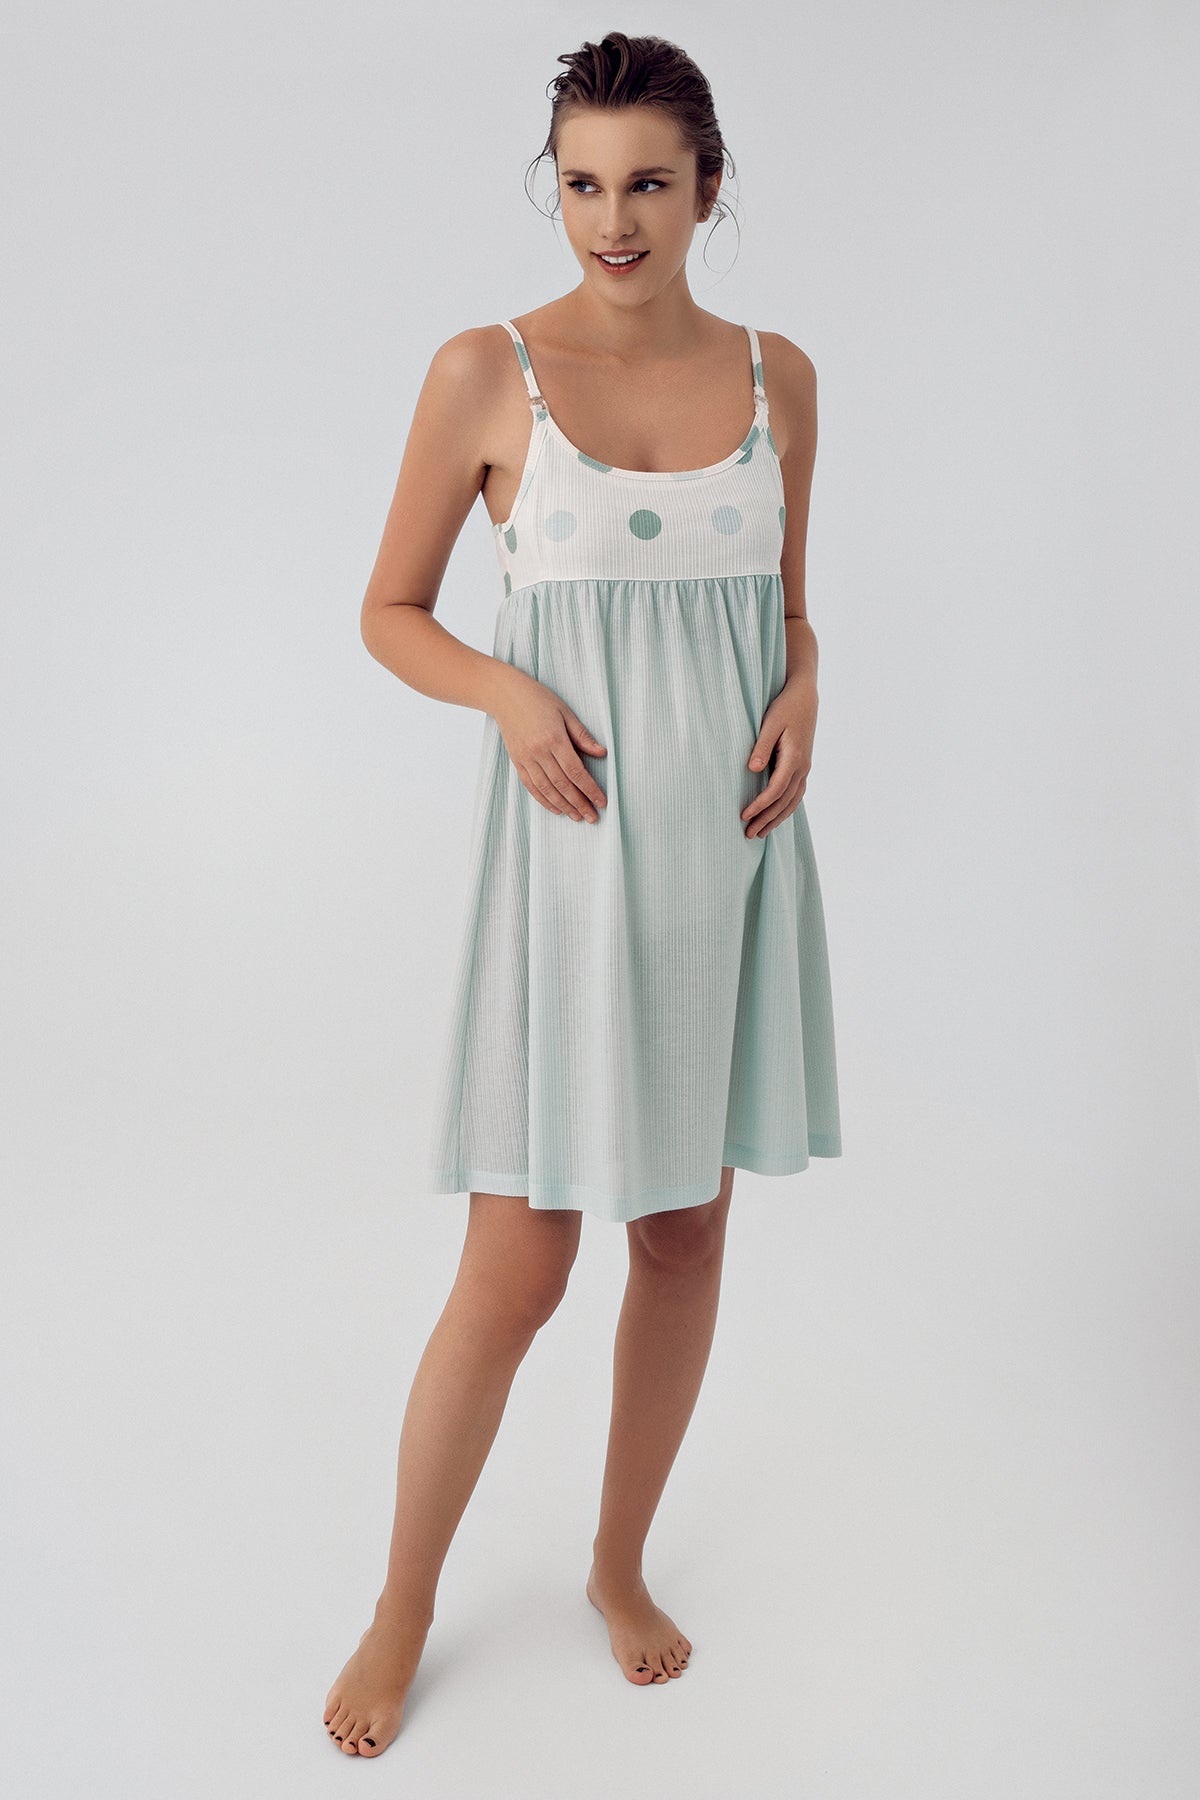 Shopymommy 16401 Polka Dot Maternity & Nursing Nightgown With Robe Green